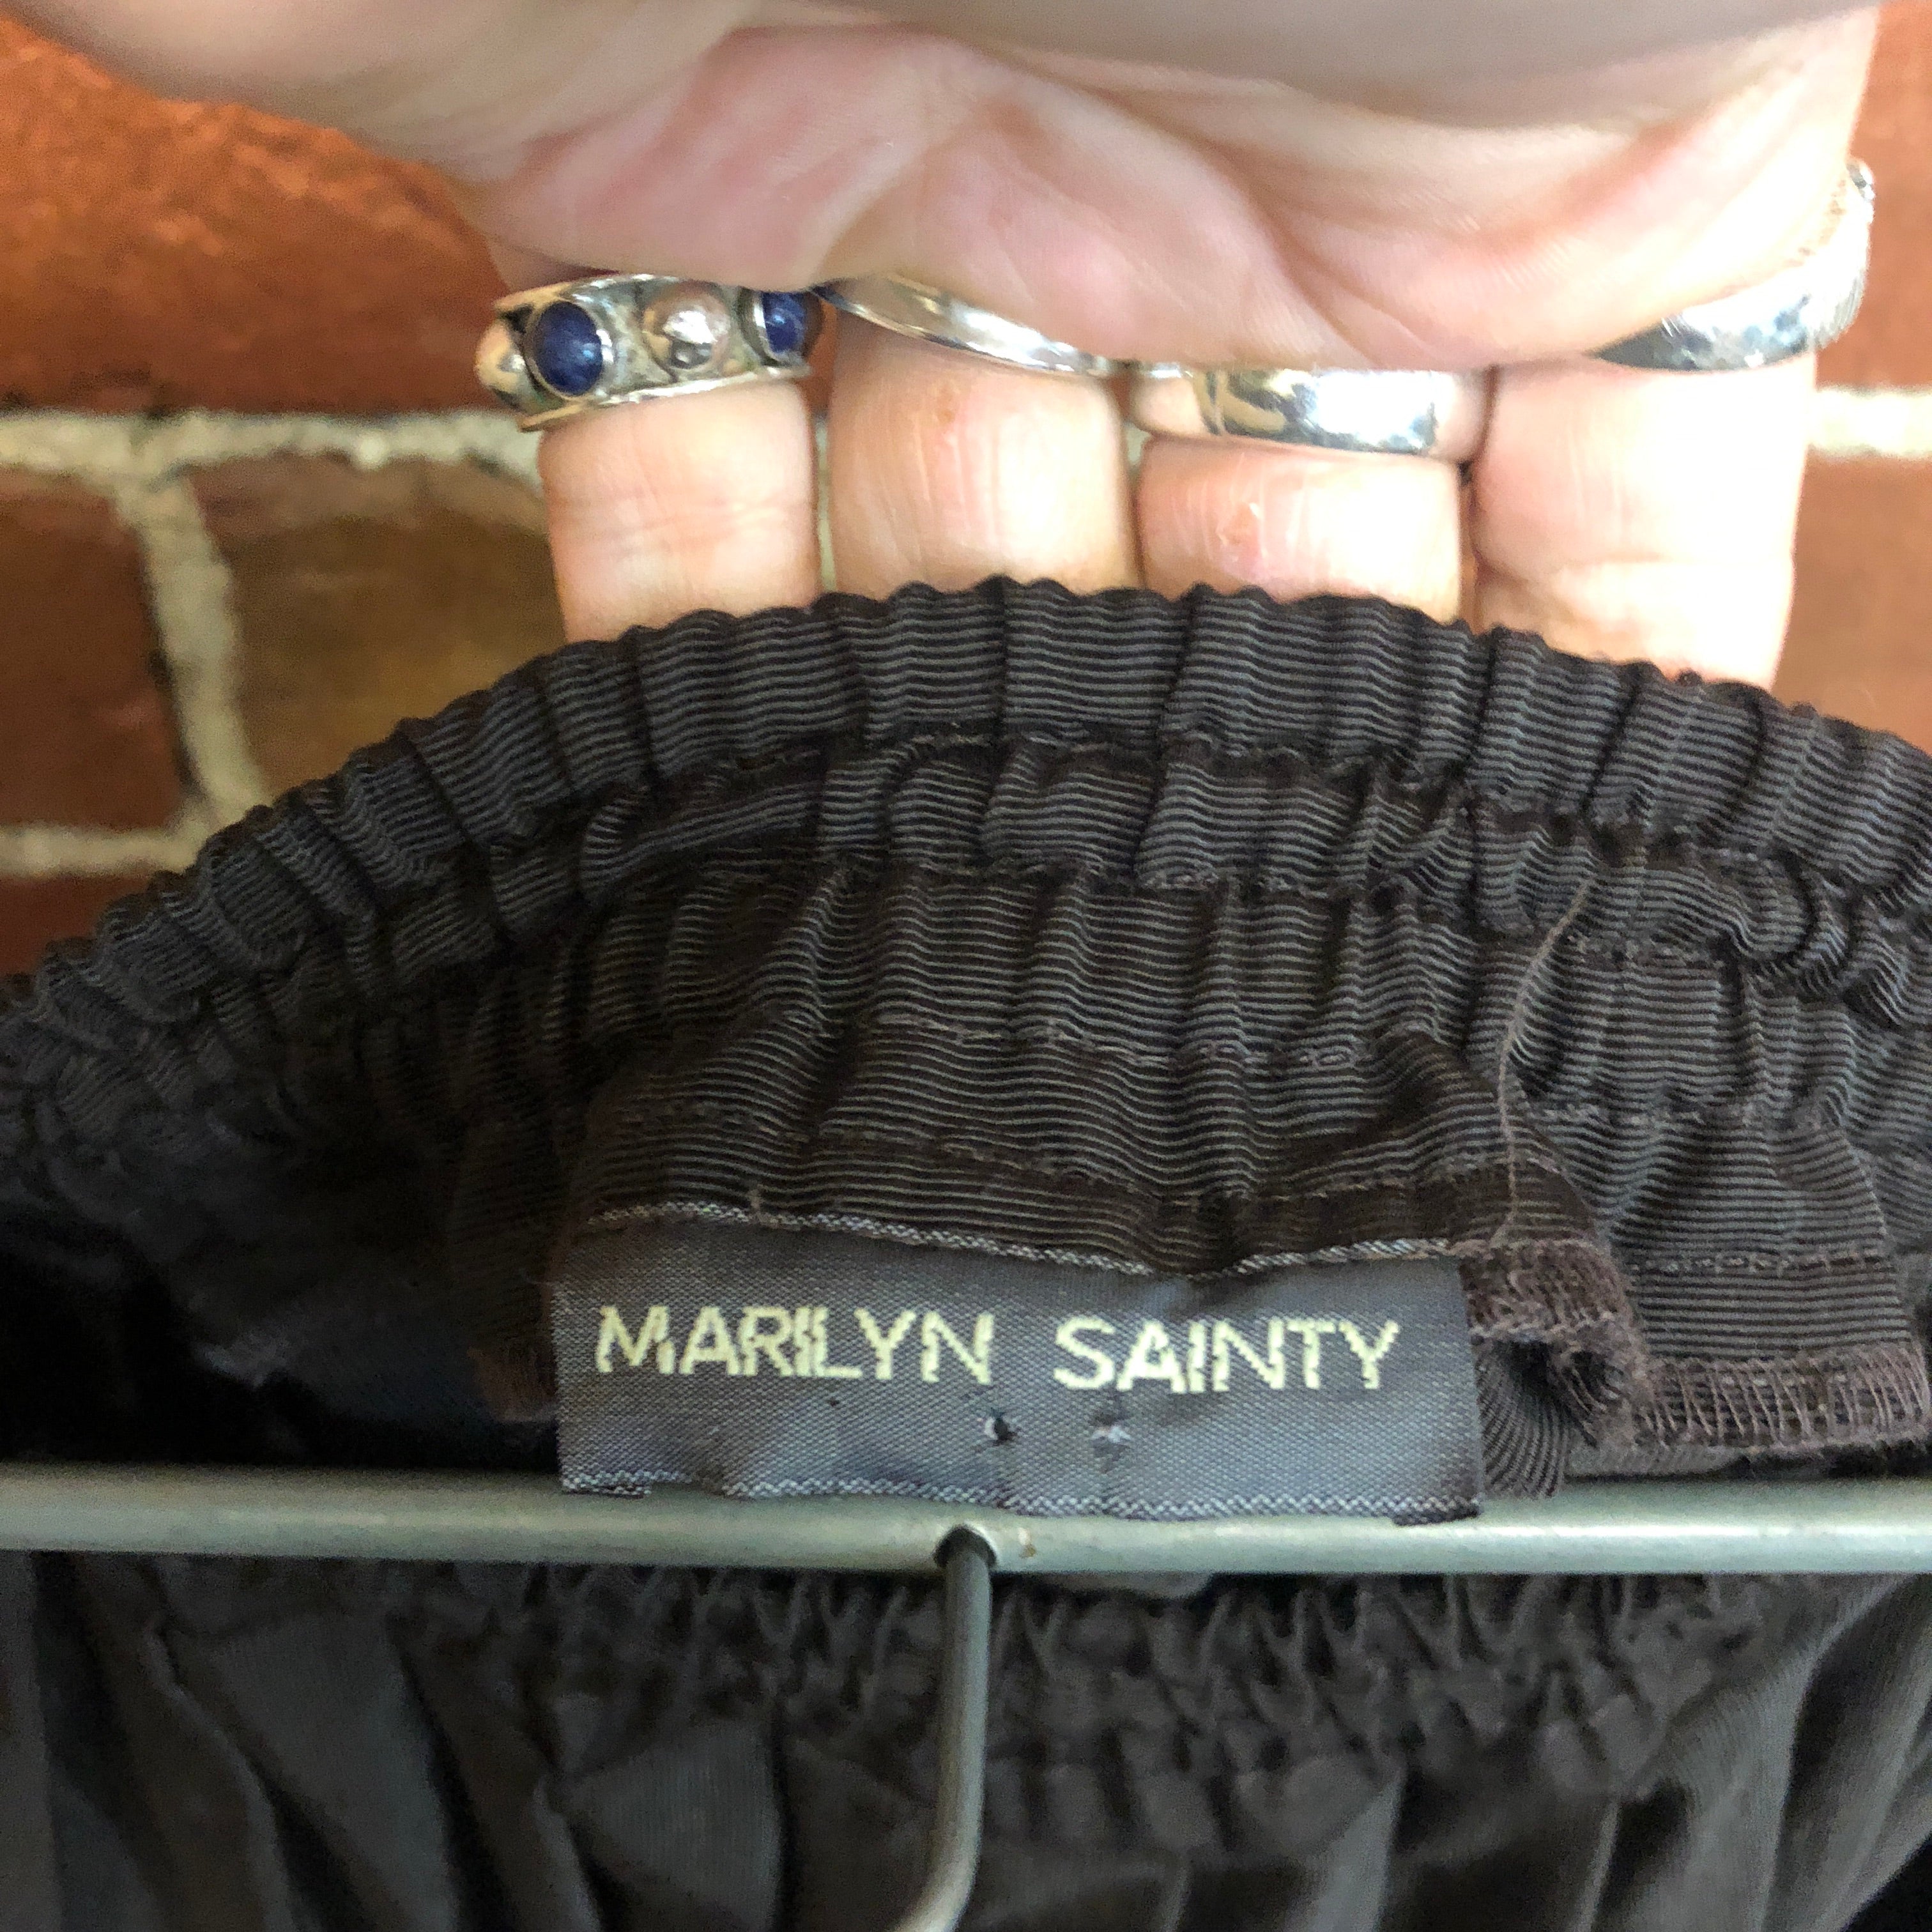 MARILYN SAINTY 1998 voluminous skirt